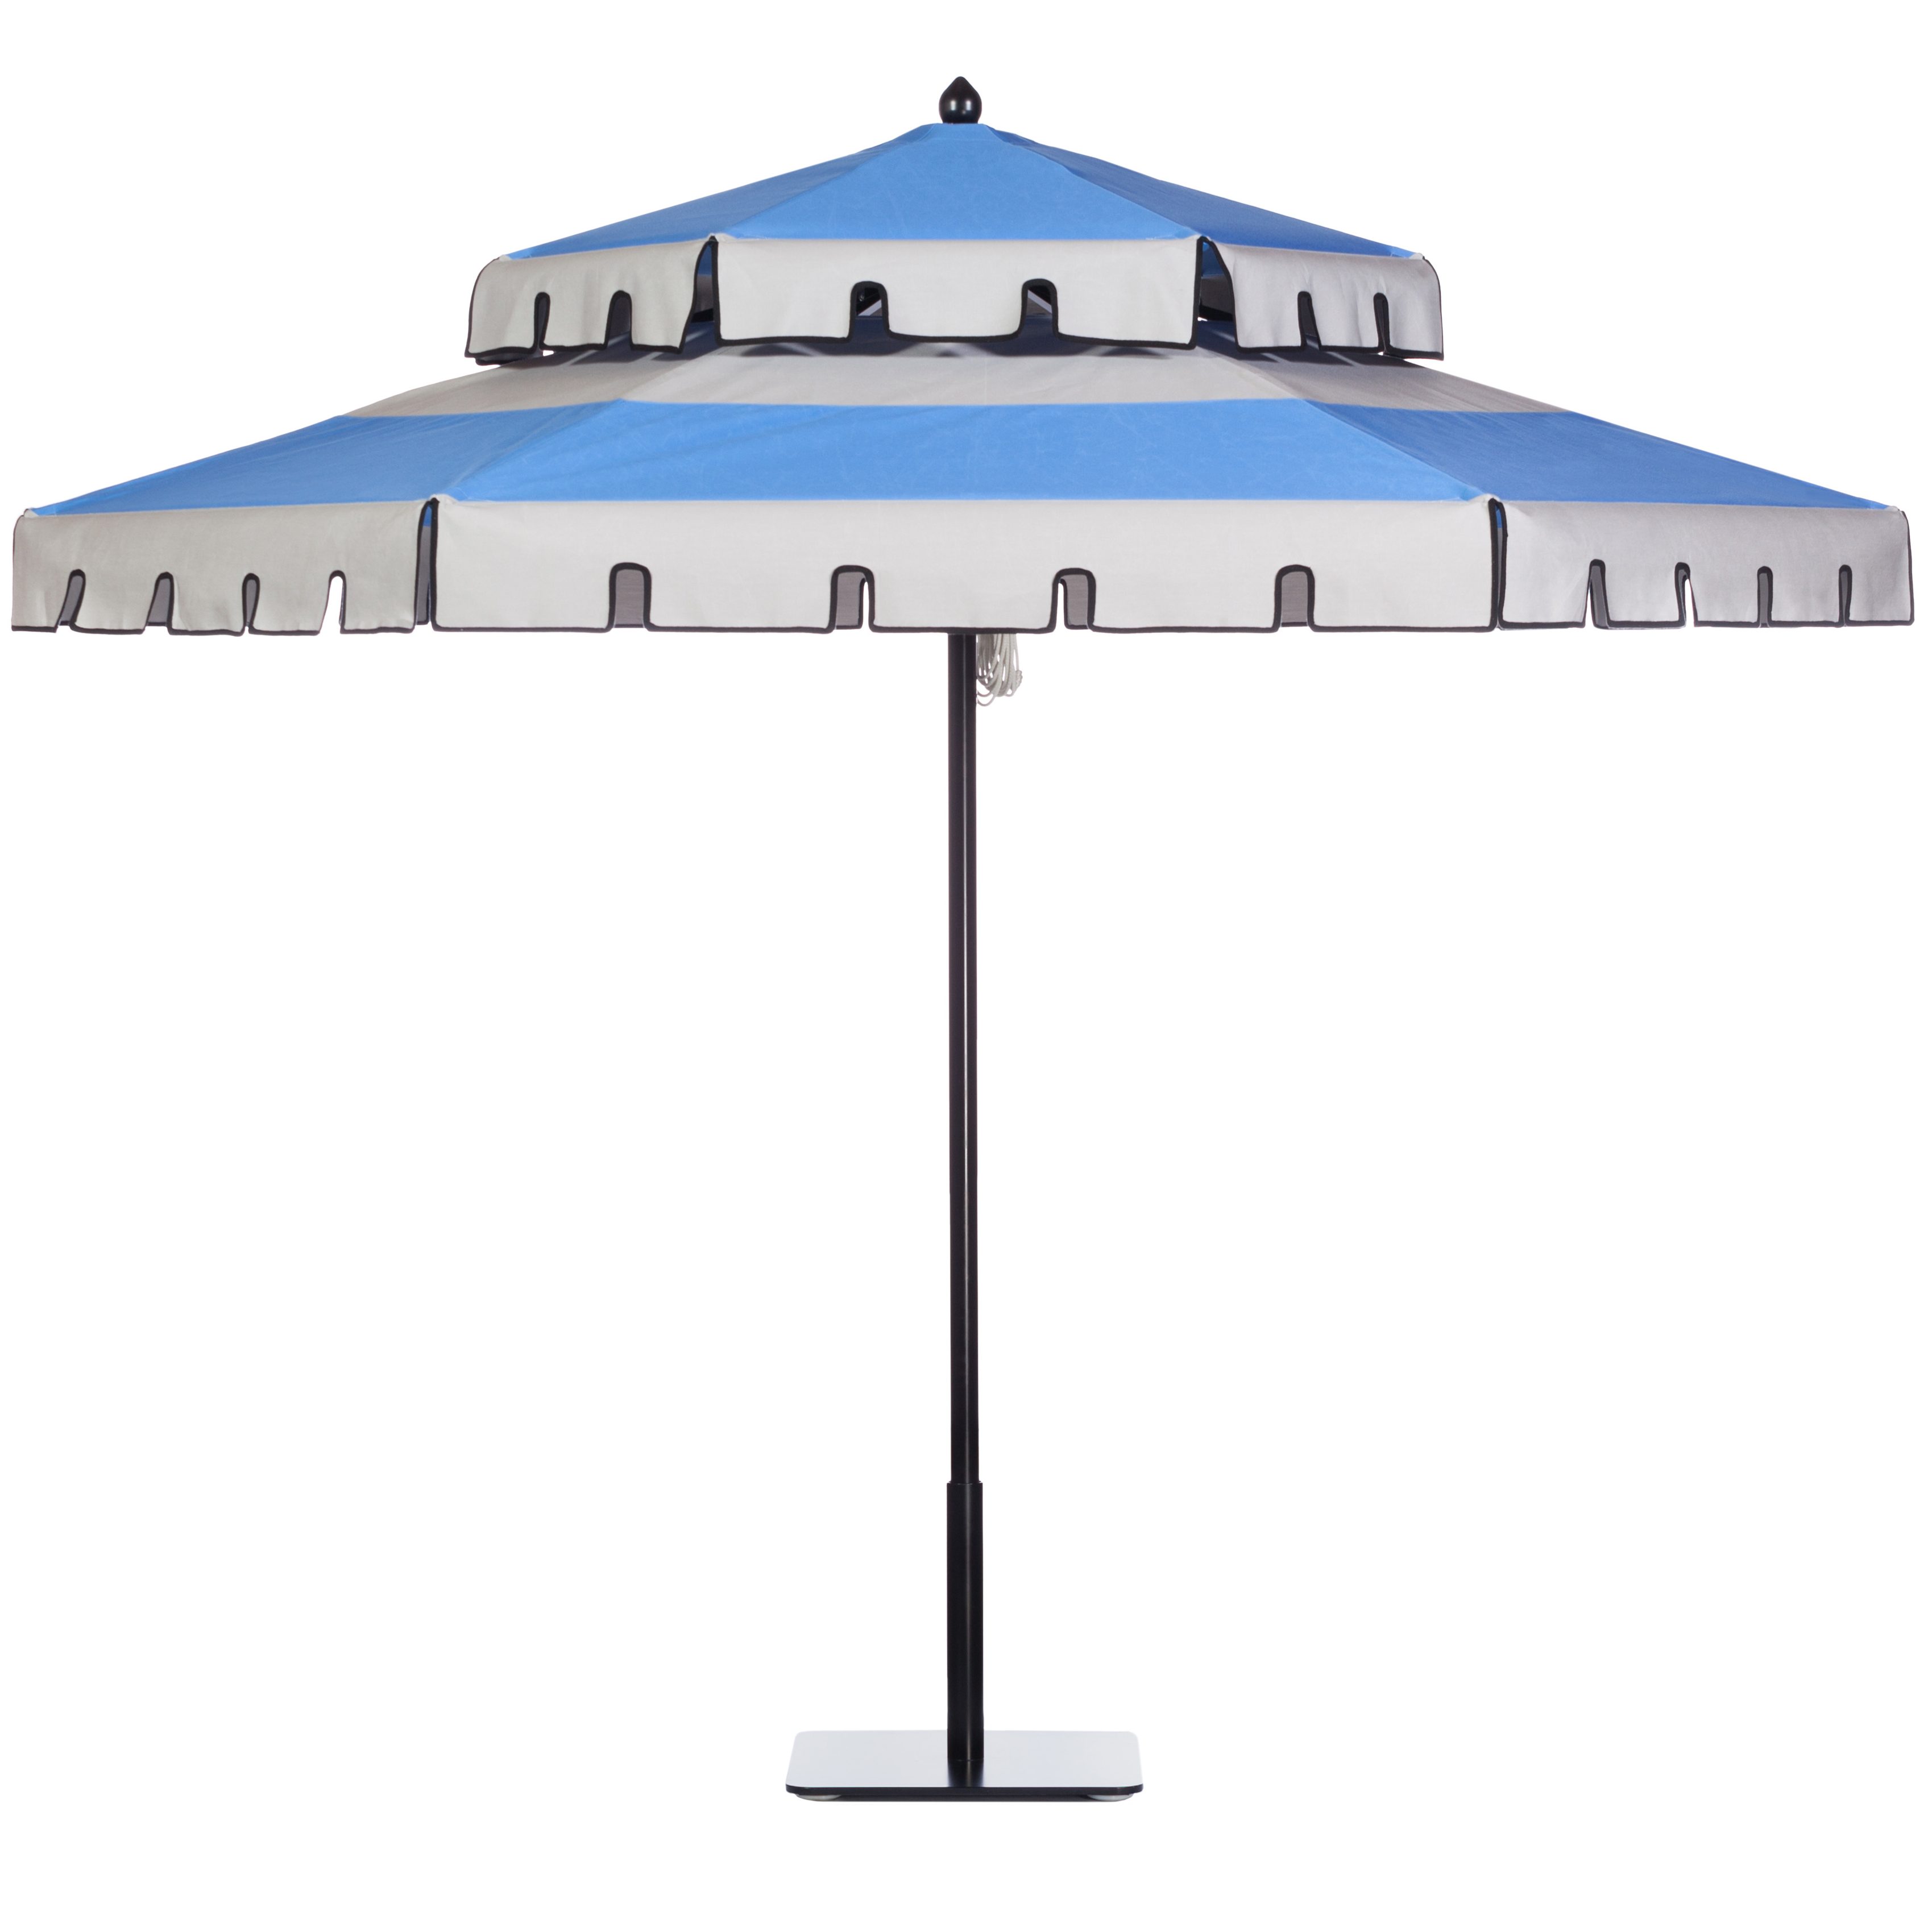 Cadet Grey & Slate Blue Umbrella Image